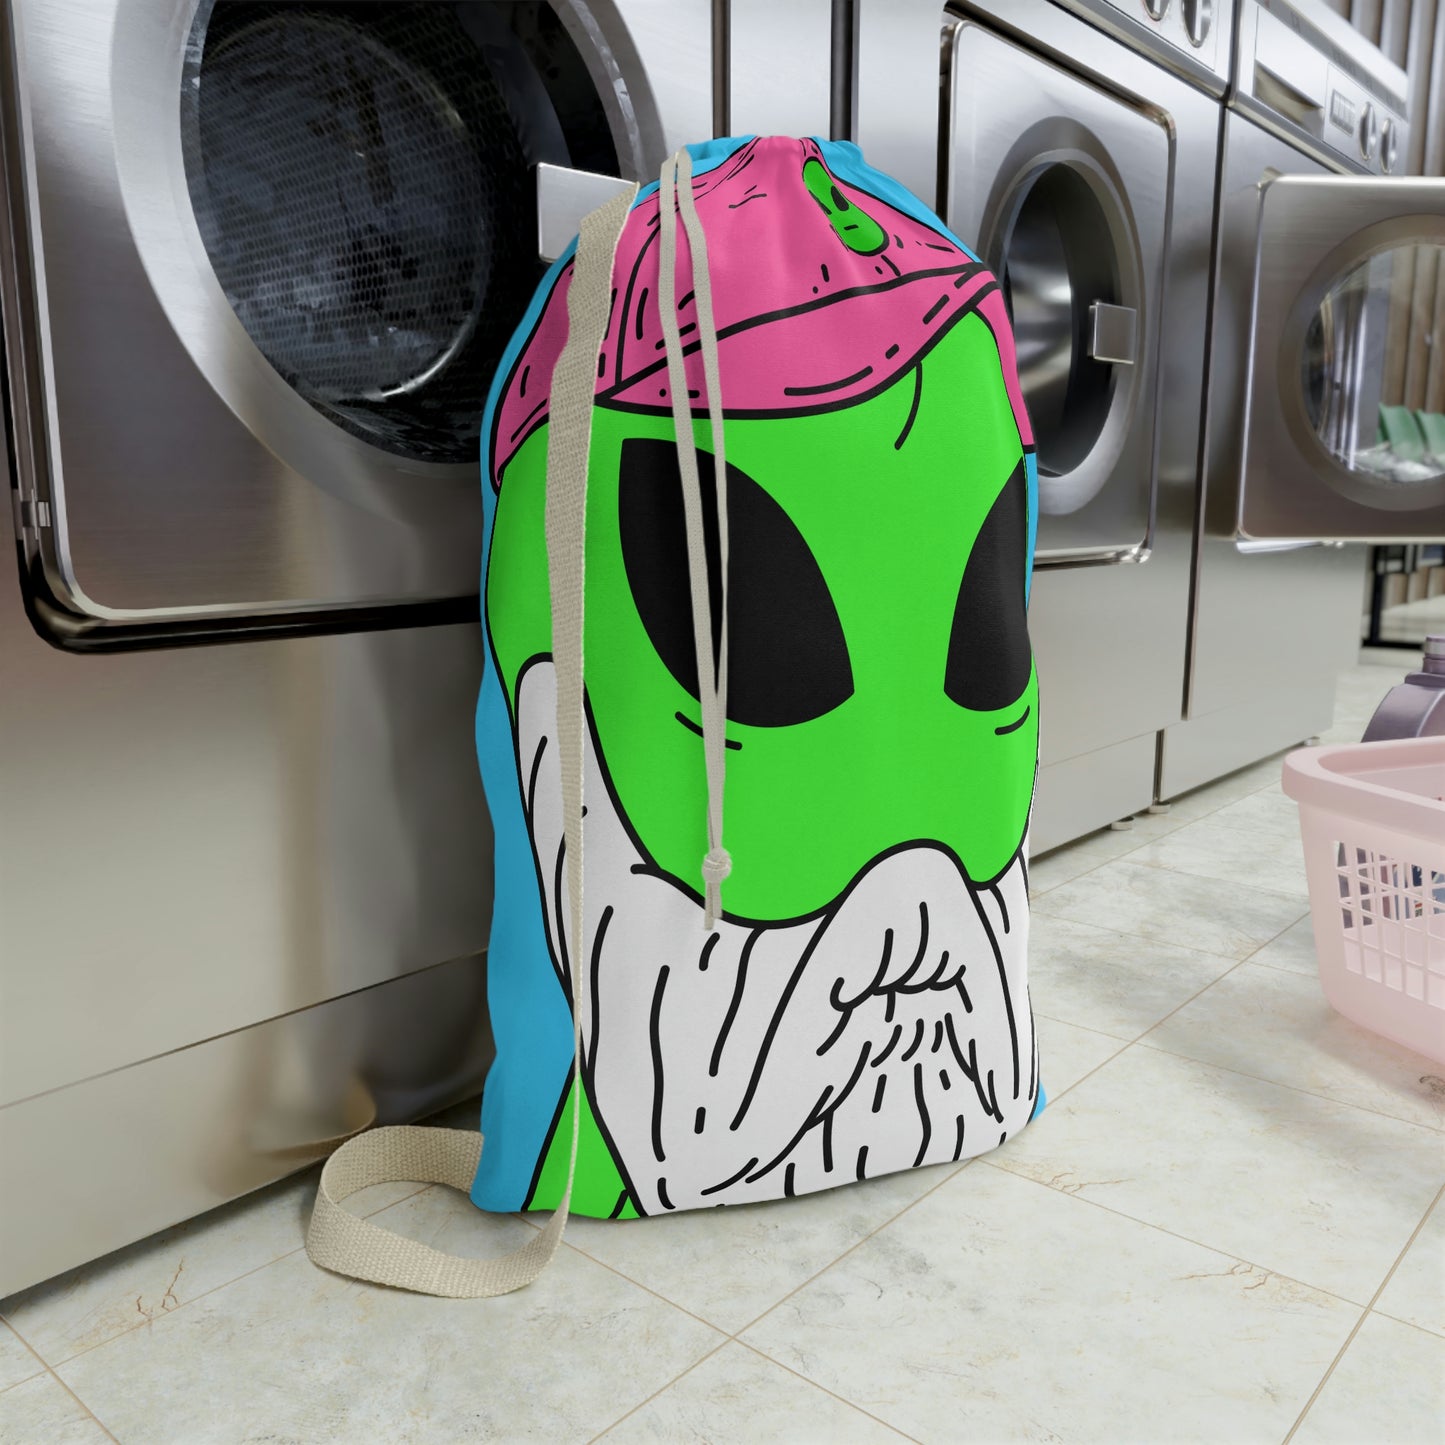 Alien Old Man Wizard Beard Visitor Cartoon Laundry Bag